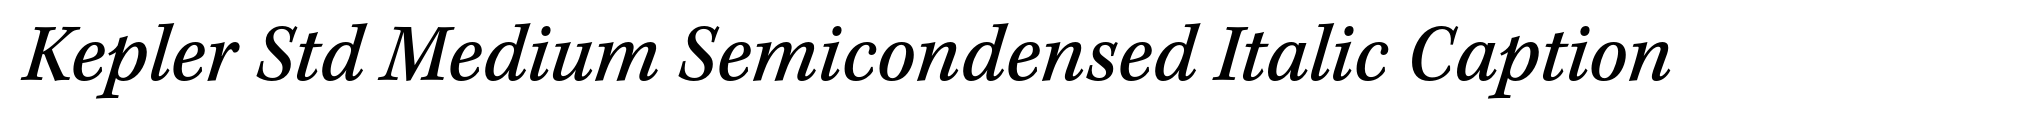 Kepler Std Medium Semicondensed Italic Caption image